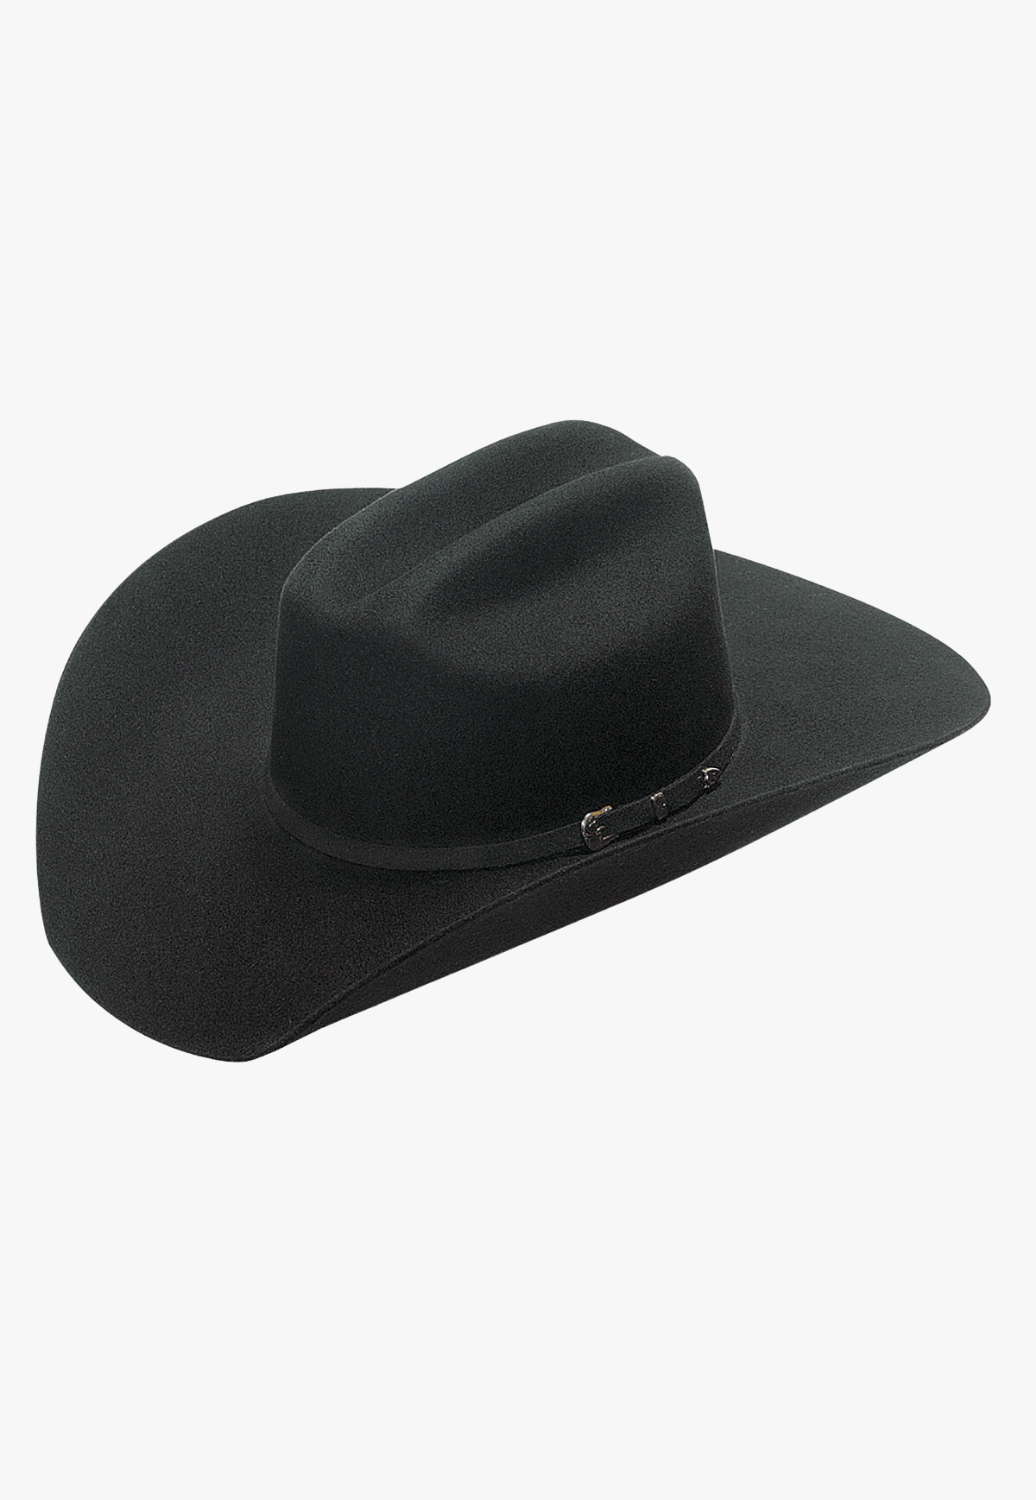 Twister HATS - Felt Twister Santa Fe Wool Hat